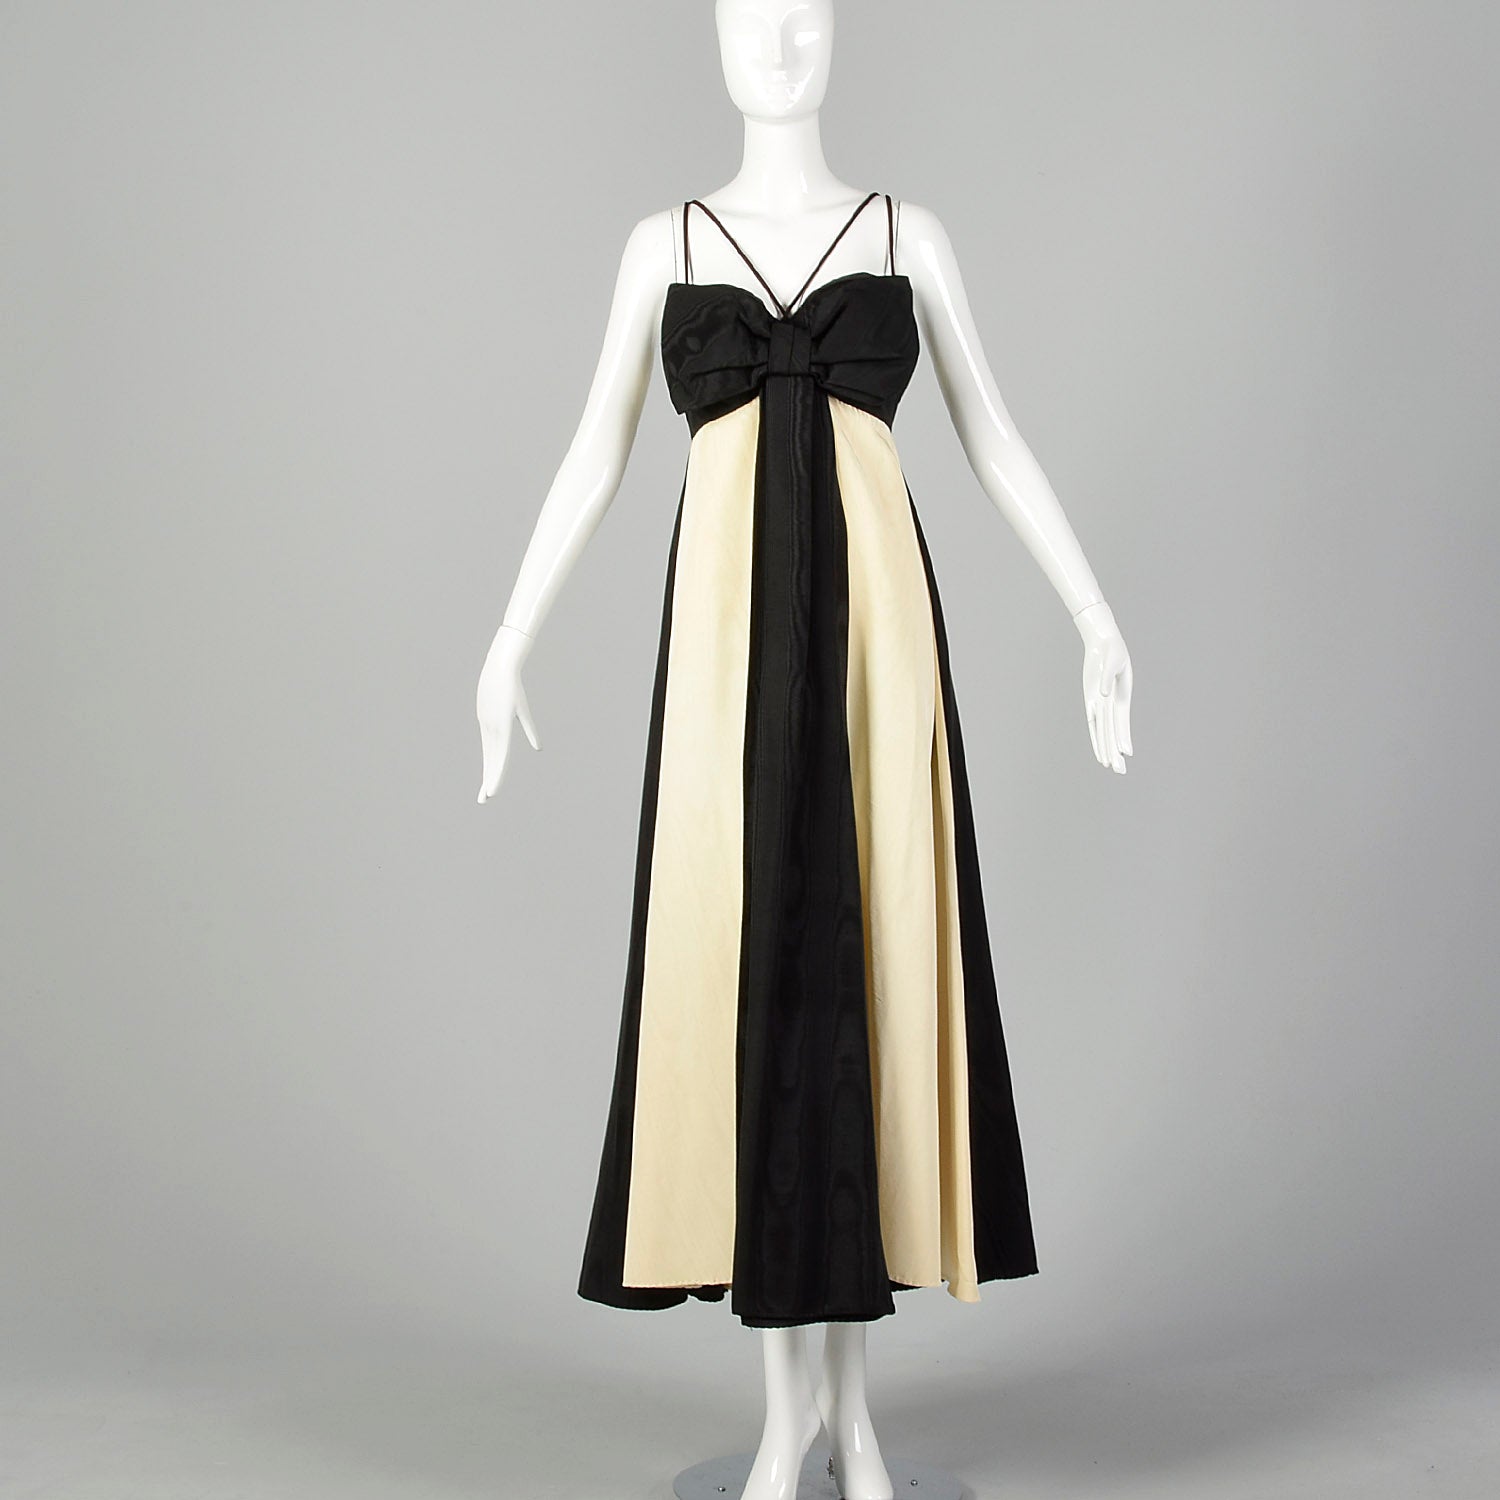 Small 1960s Black & White Formal Dress